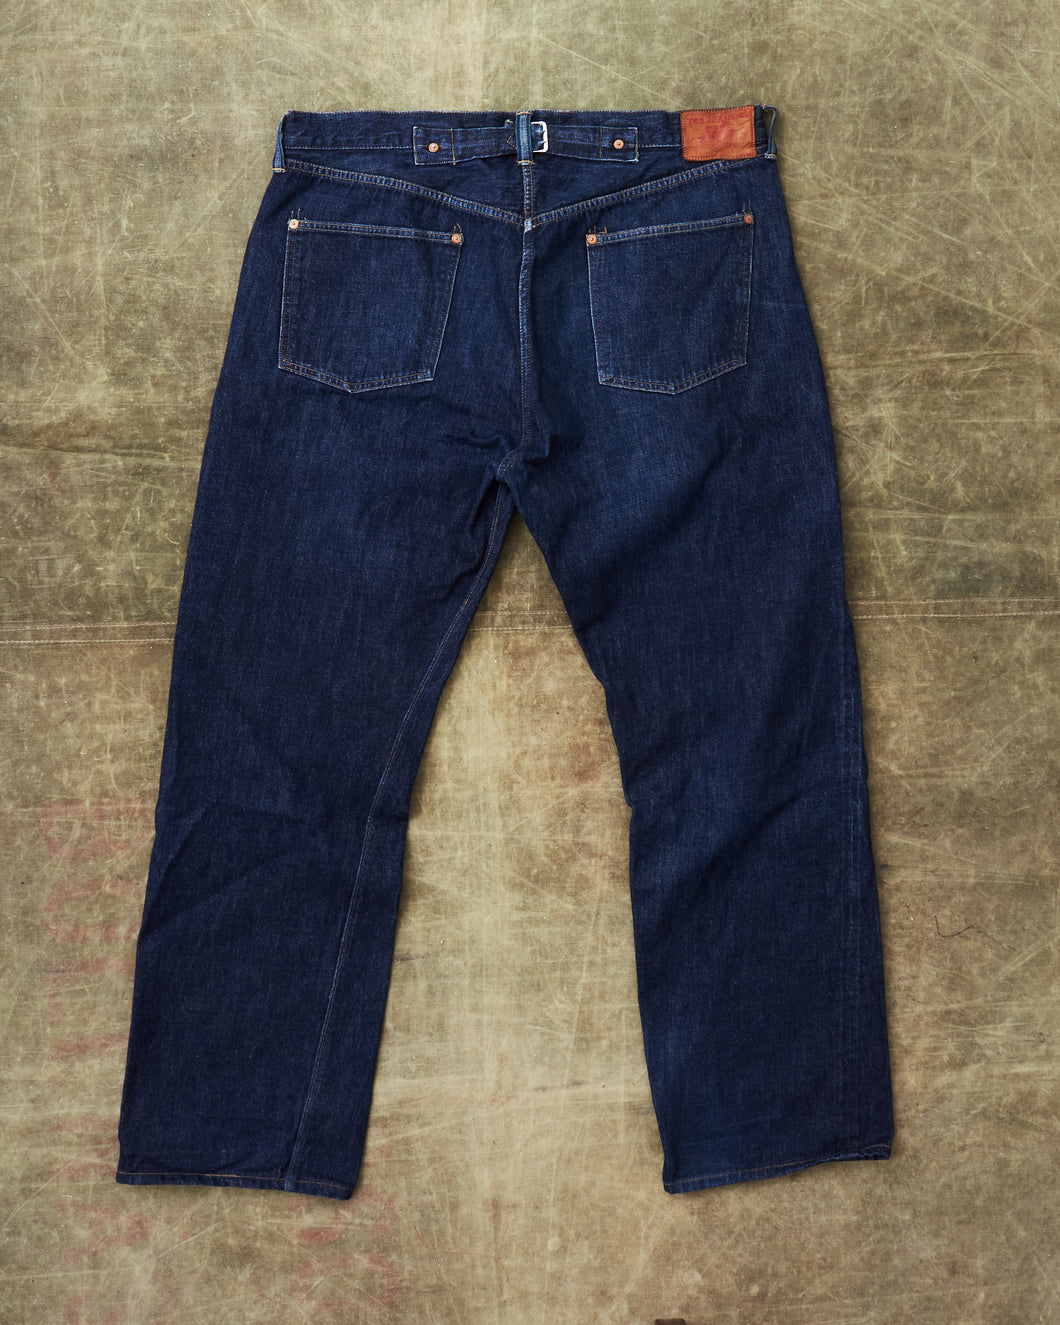 TWOSTA新品未使用 W33 TCB jeans TWO STAR JEANS TYPE1